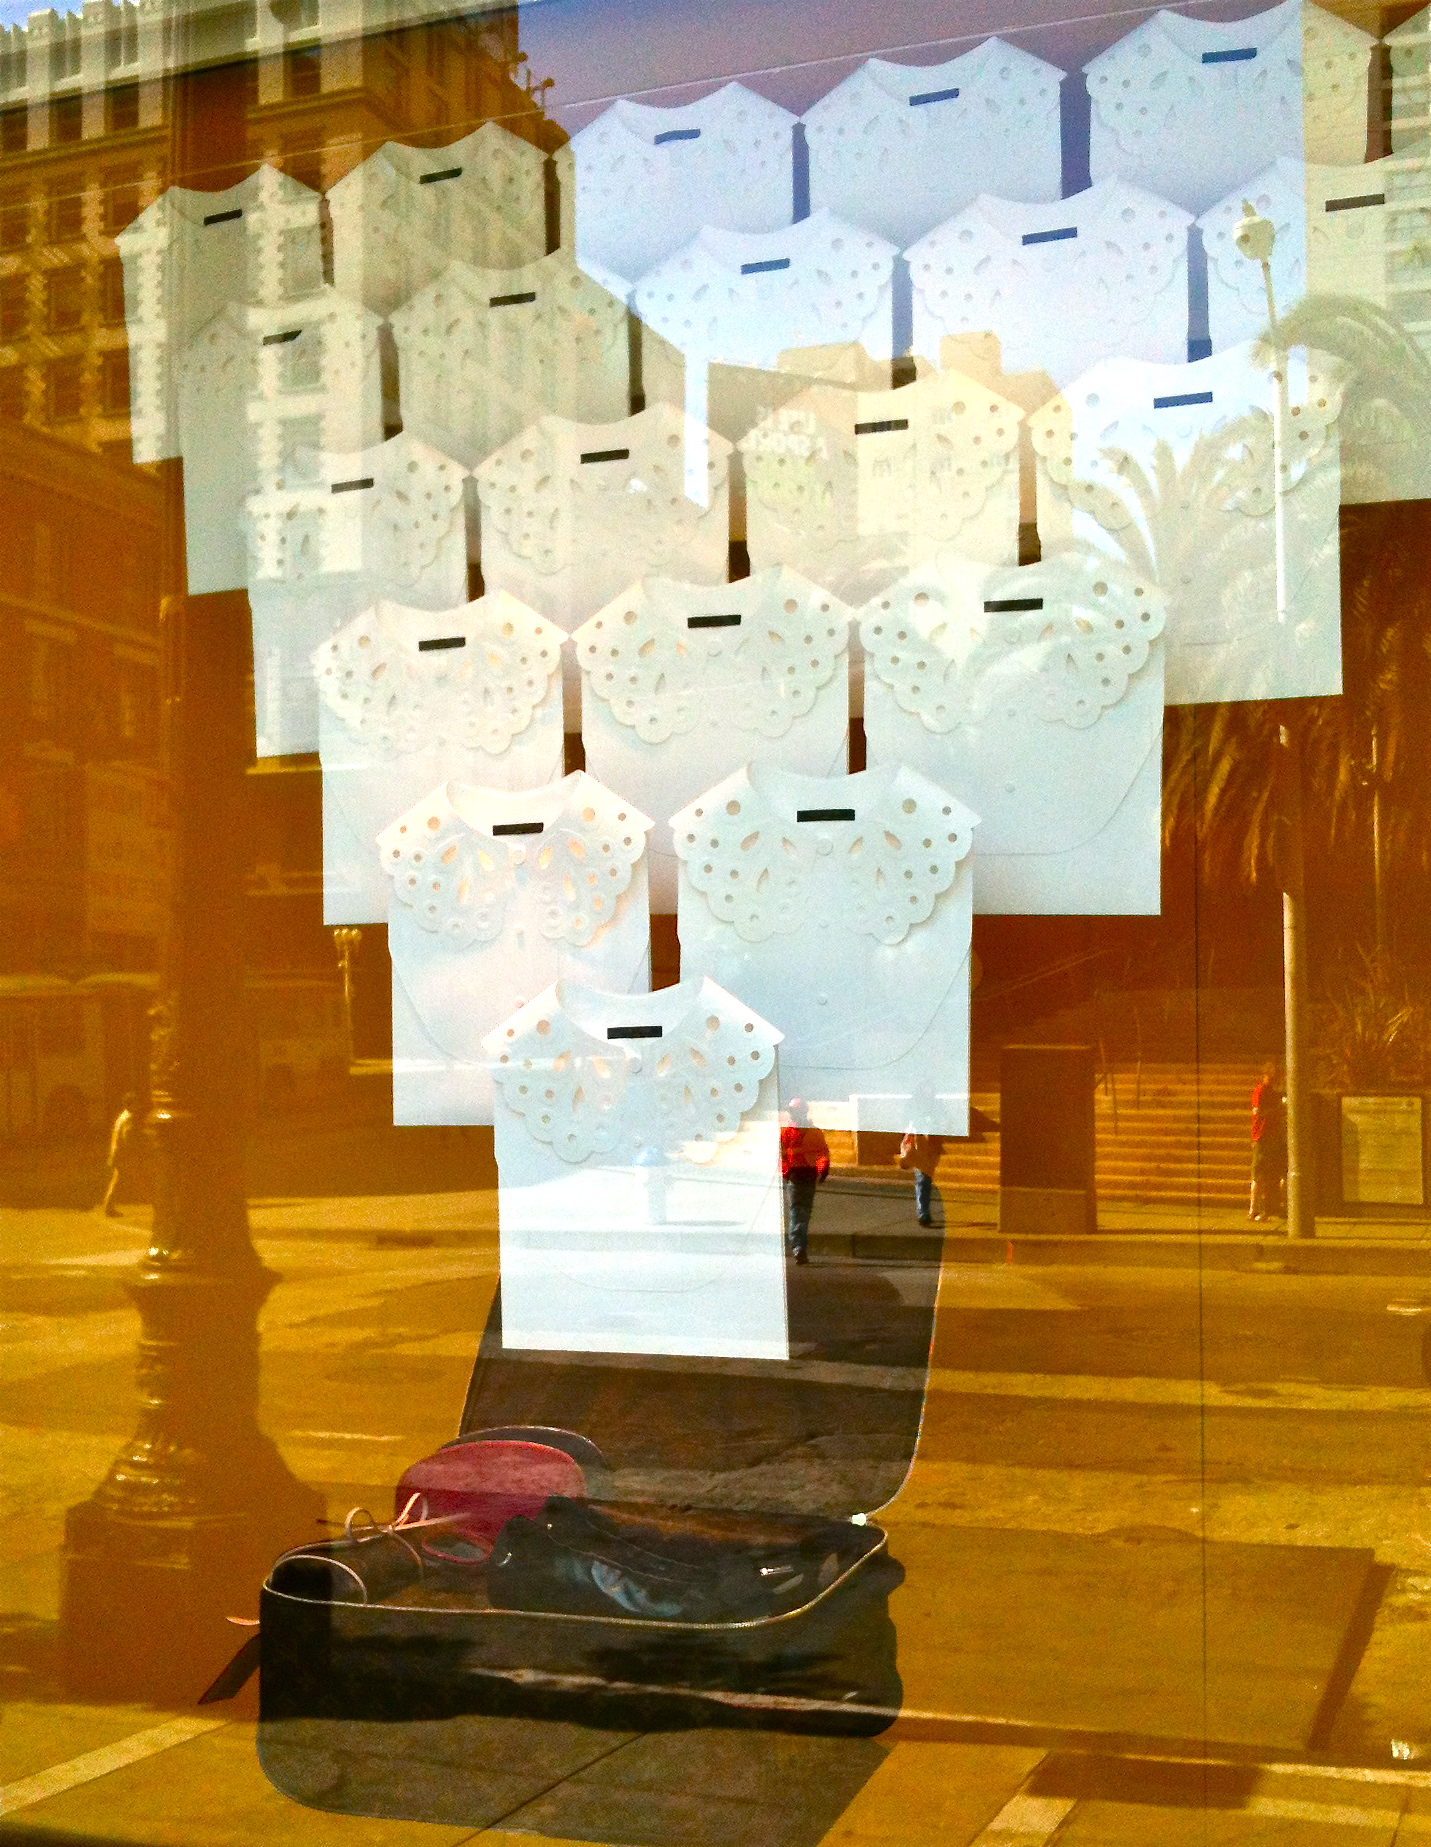 Louis Vuitton Window Display in Macy's- BW, Shot looking do…